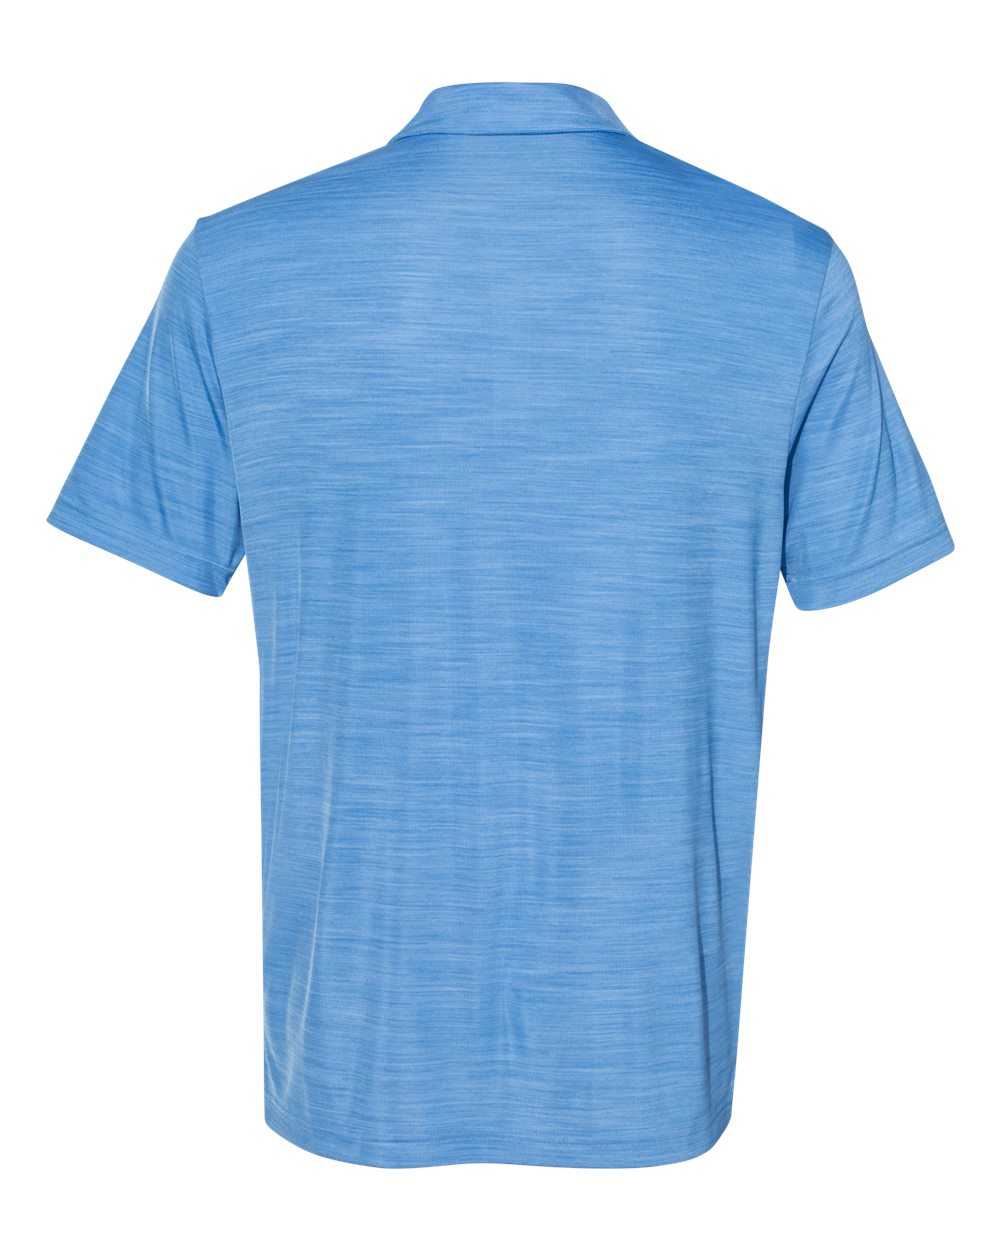 Adidas A402 M??lange Sport Shirt - Lucky Blue Melange - HIT a Double